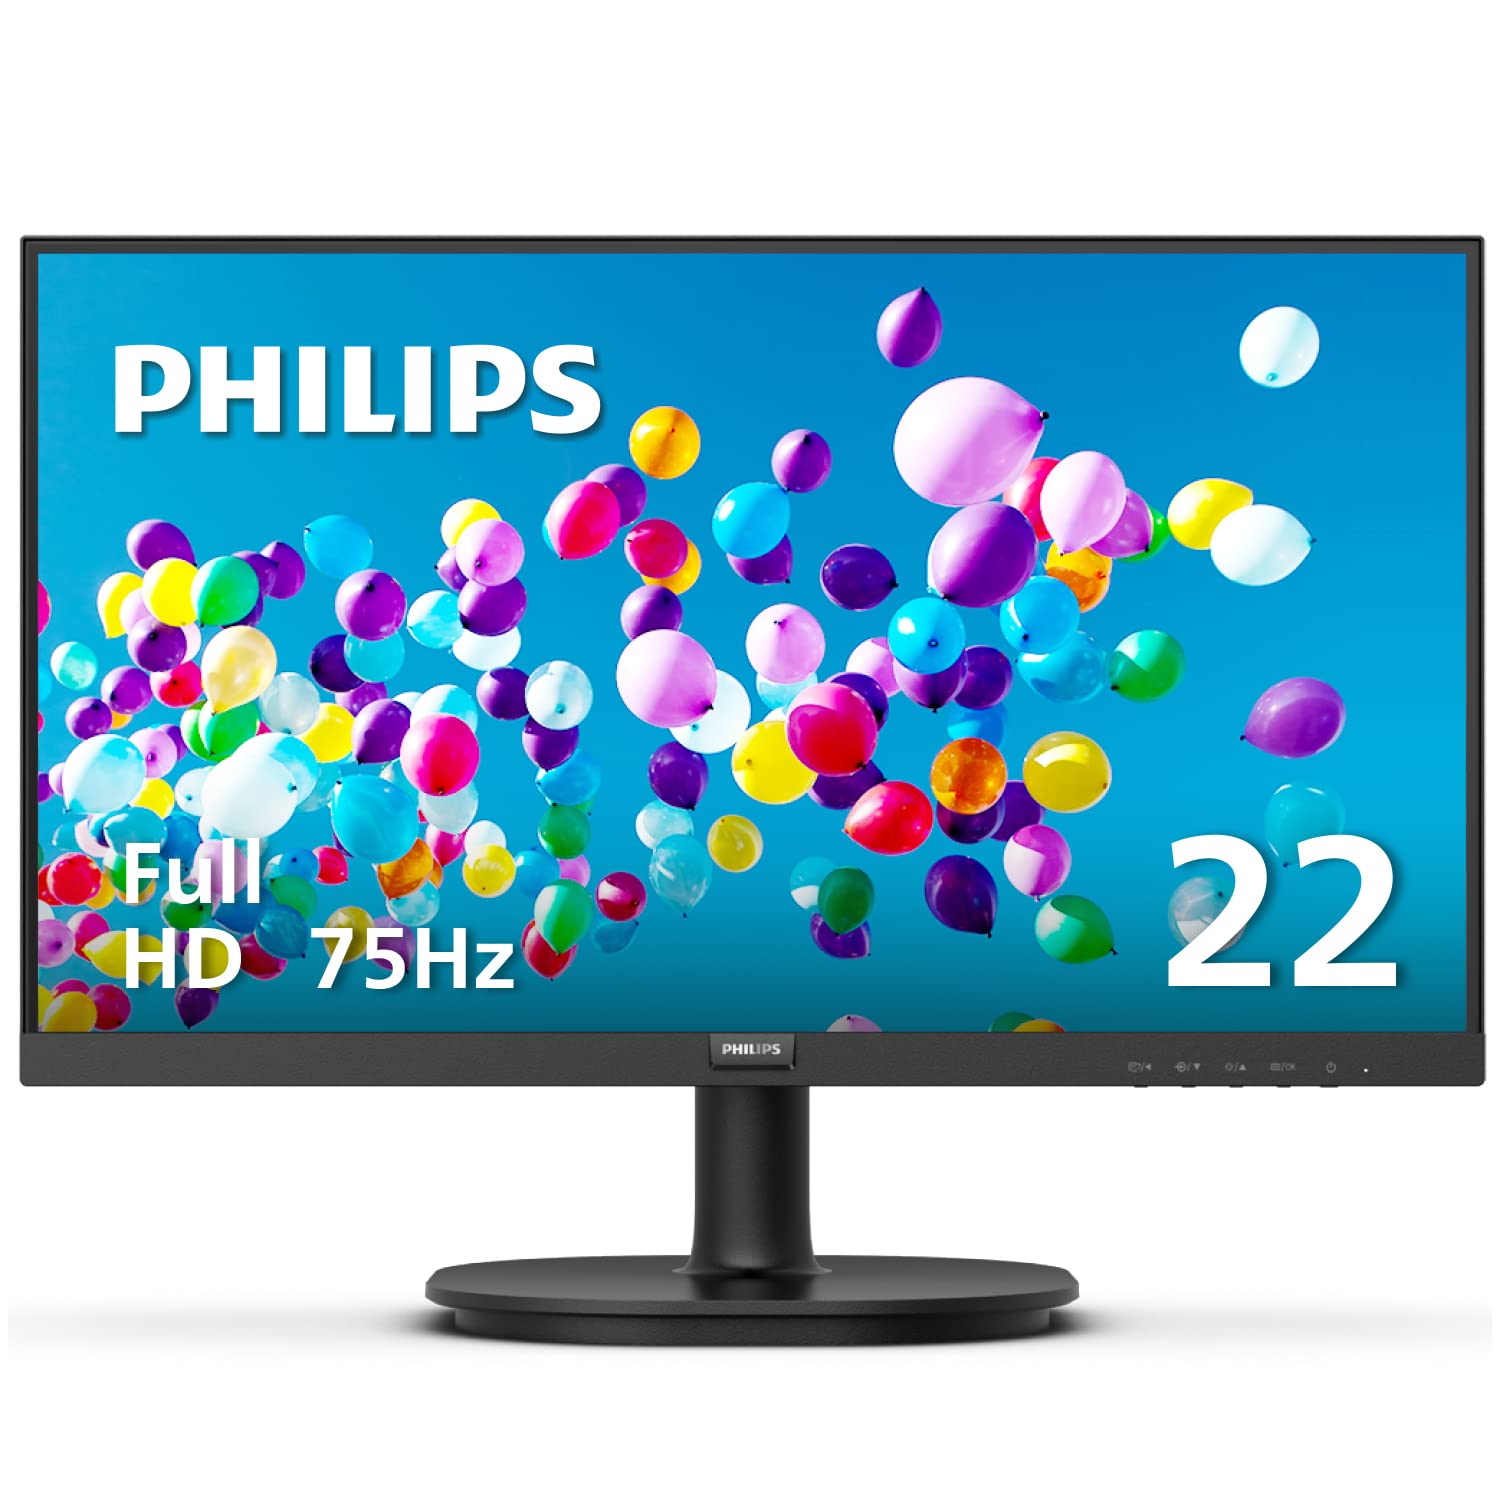 Philips Computer Monitors فيليبس بيور 2